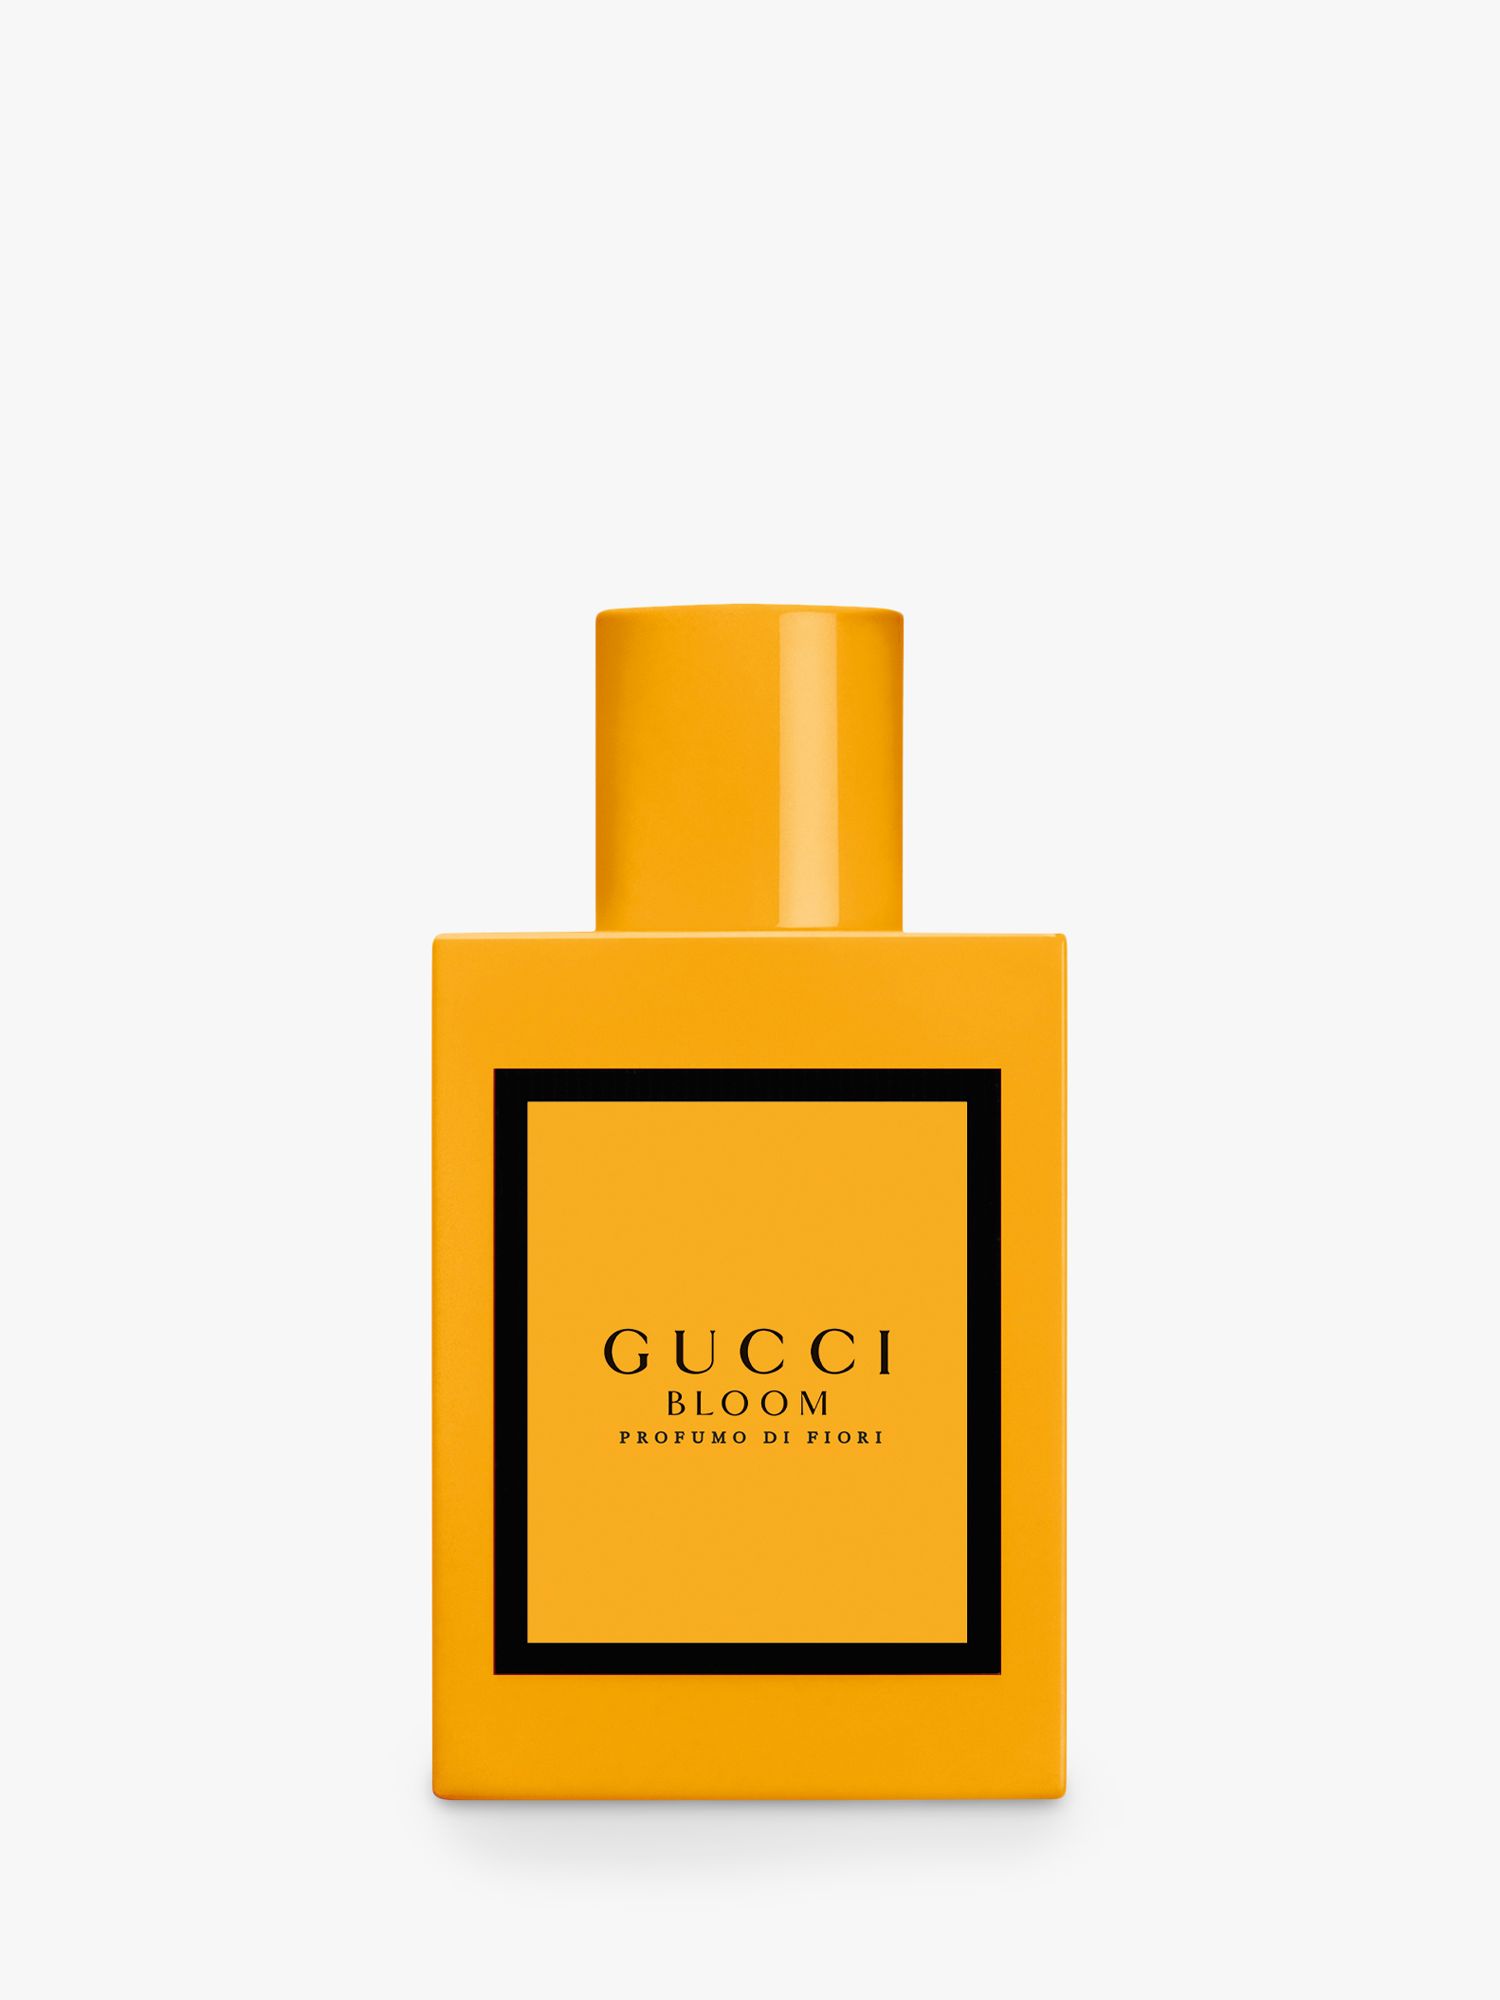 Gucci Bloom Profumo di Fiori Eau de Parfum For Her. 50ml at John Lewis